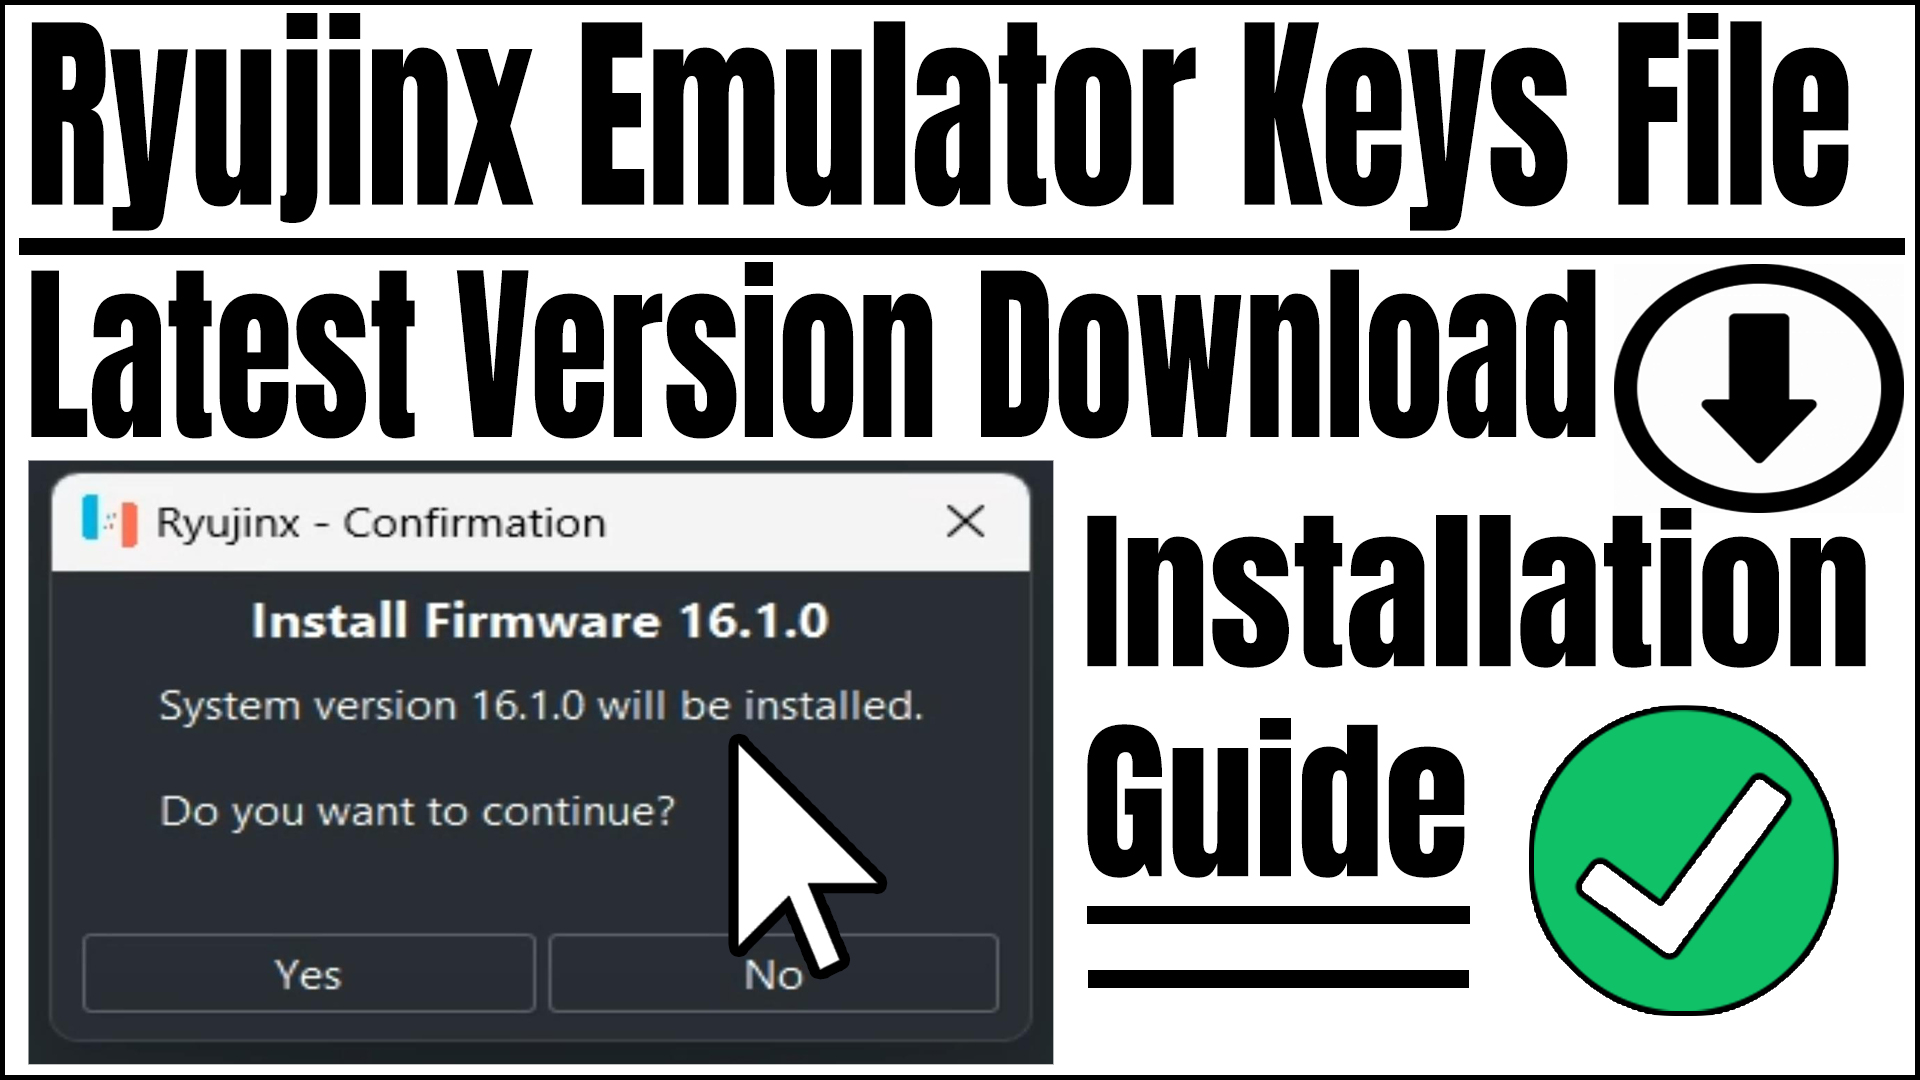 Ryujinx Emulator Keys Download and Installation Guide